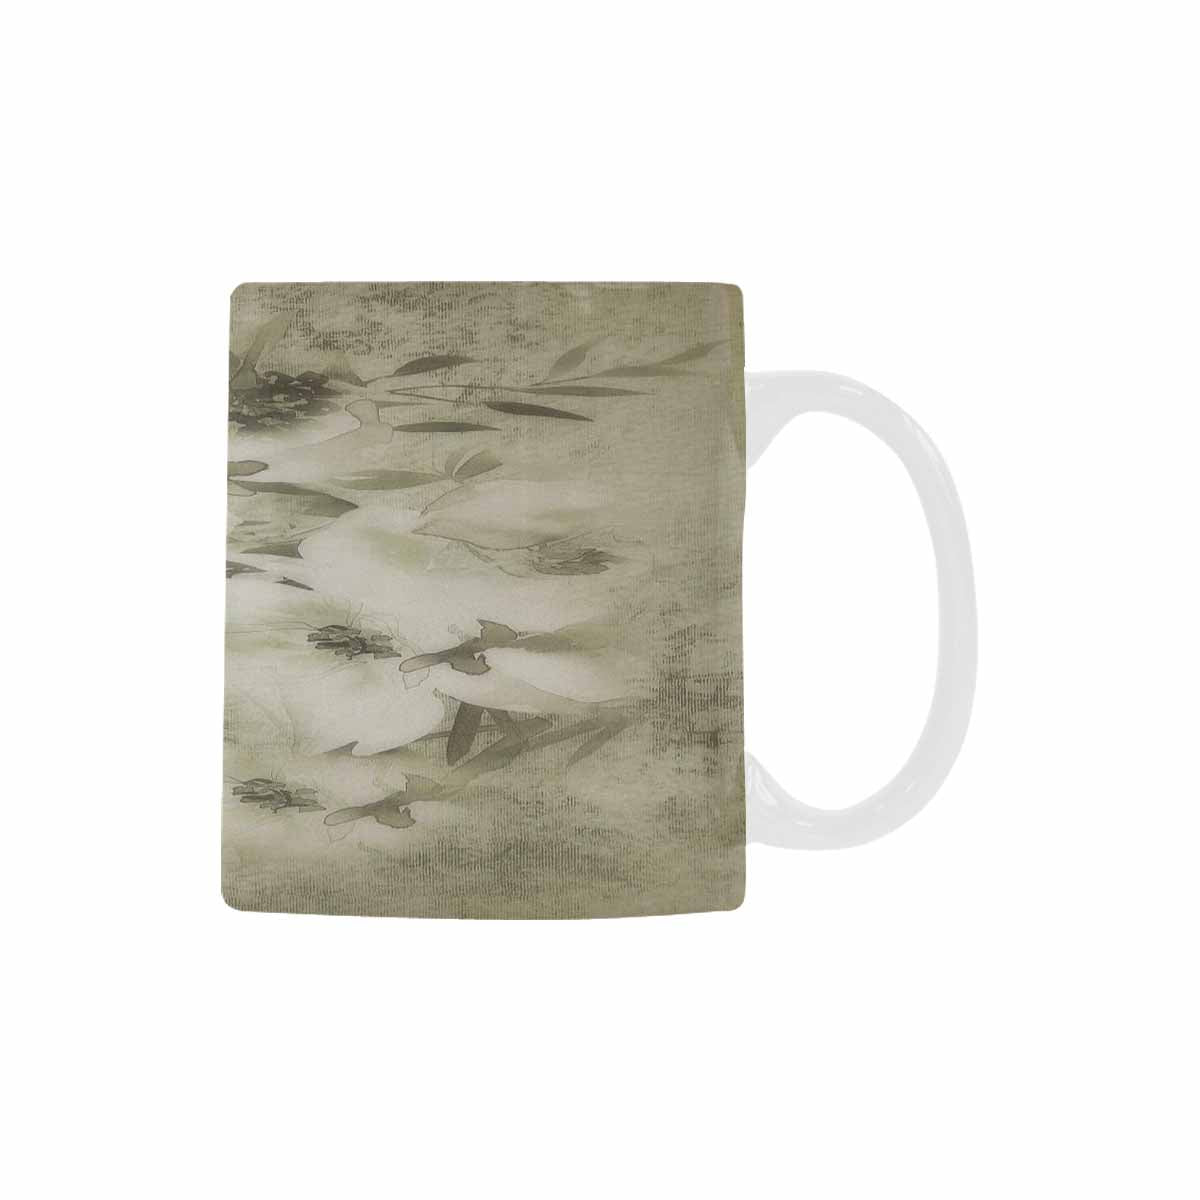 Vintage floral coffee mug or tea cup, Design 03x